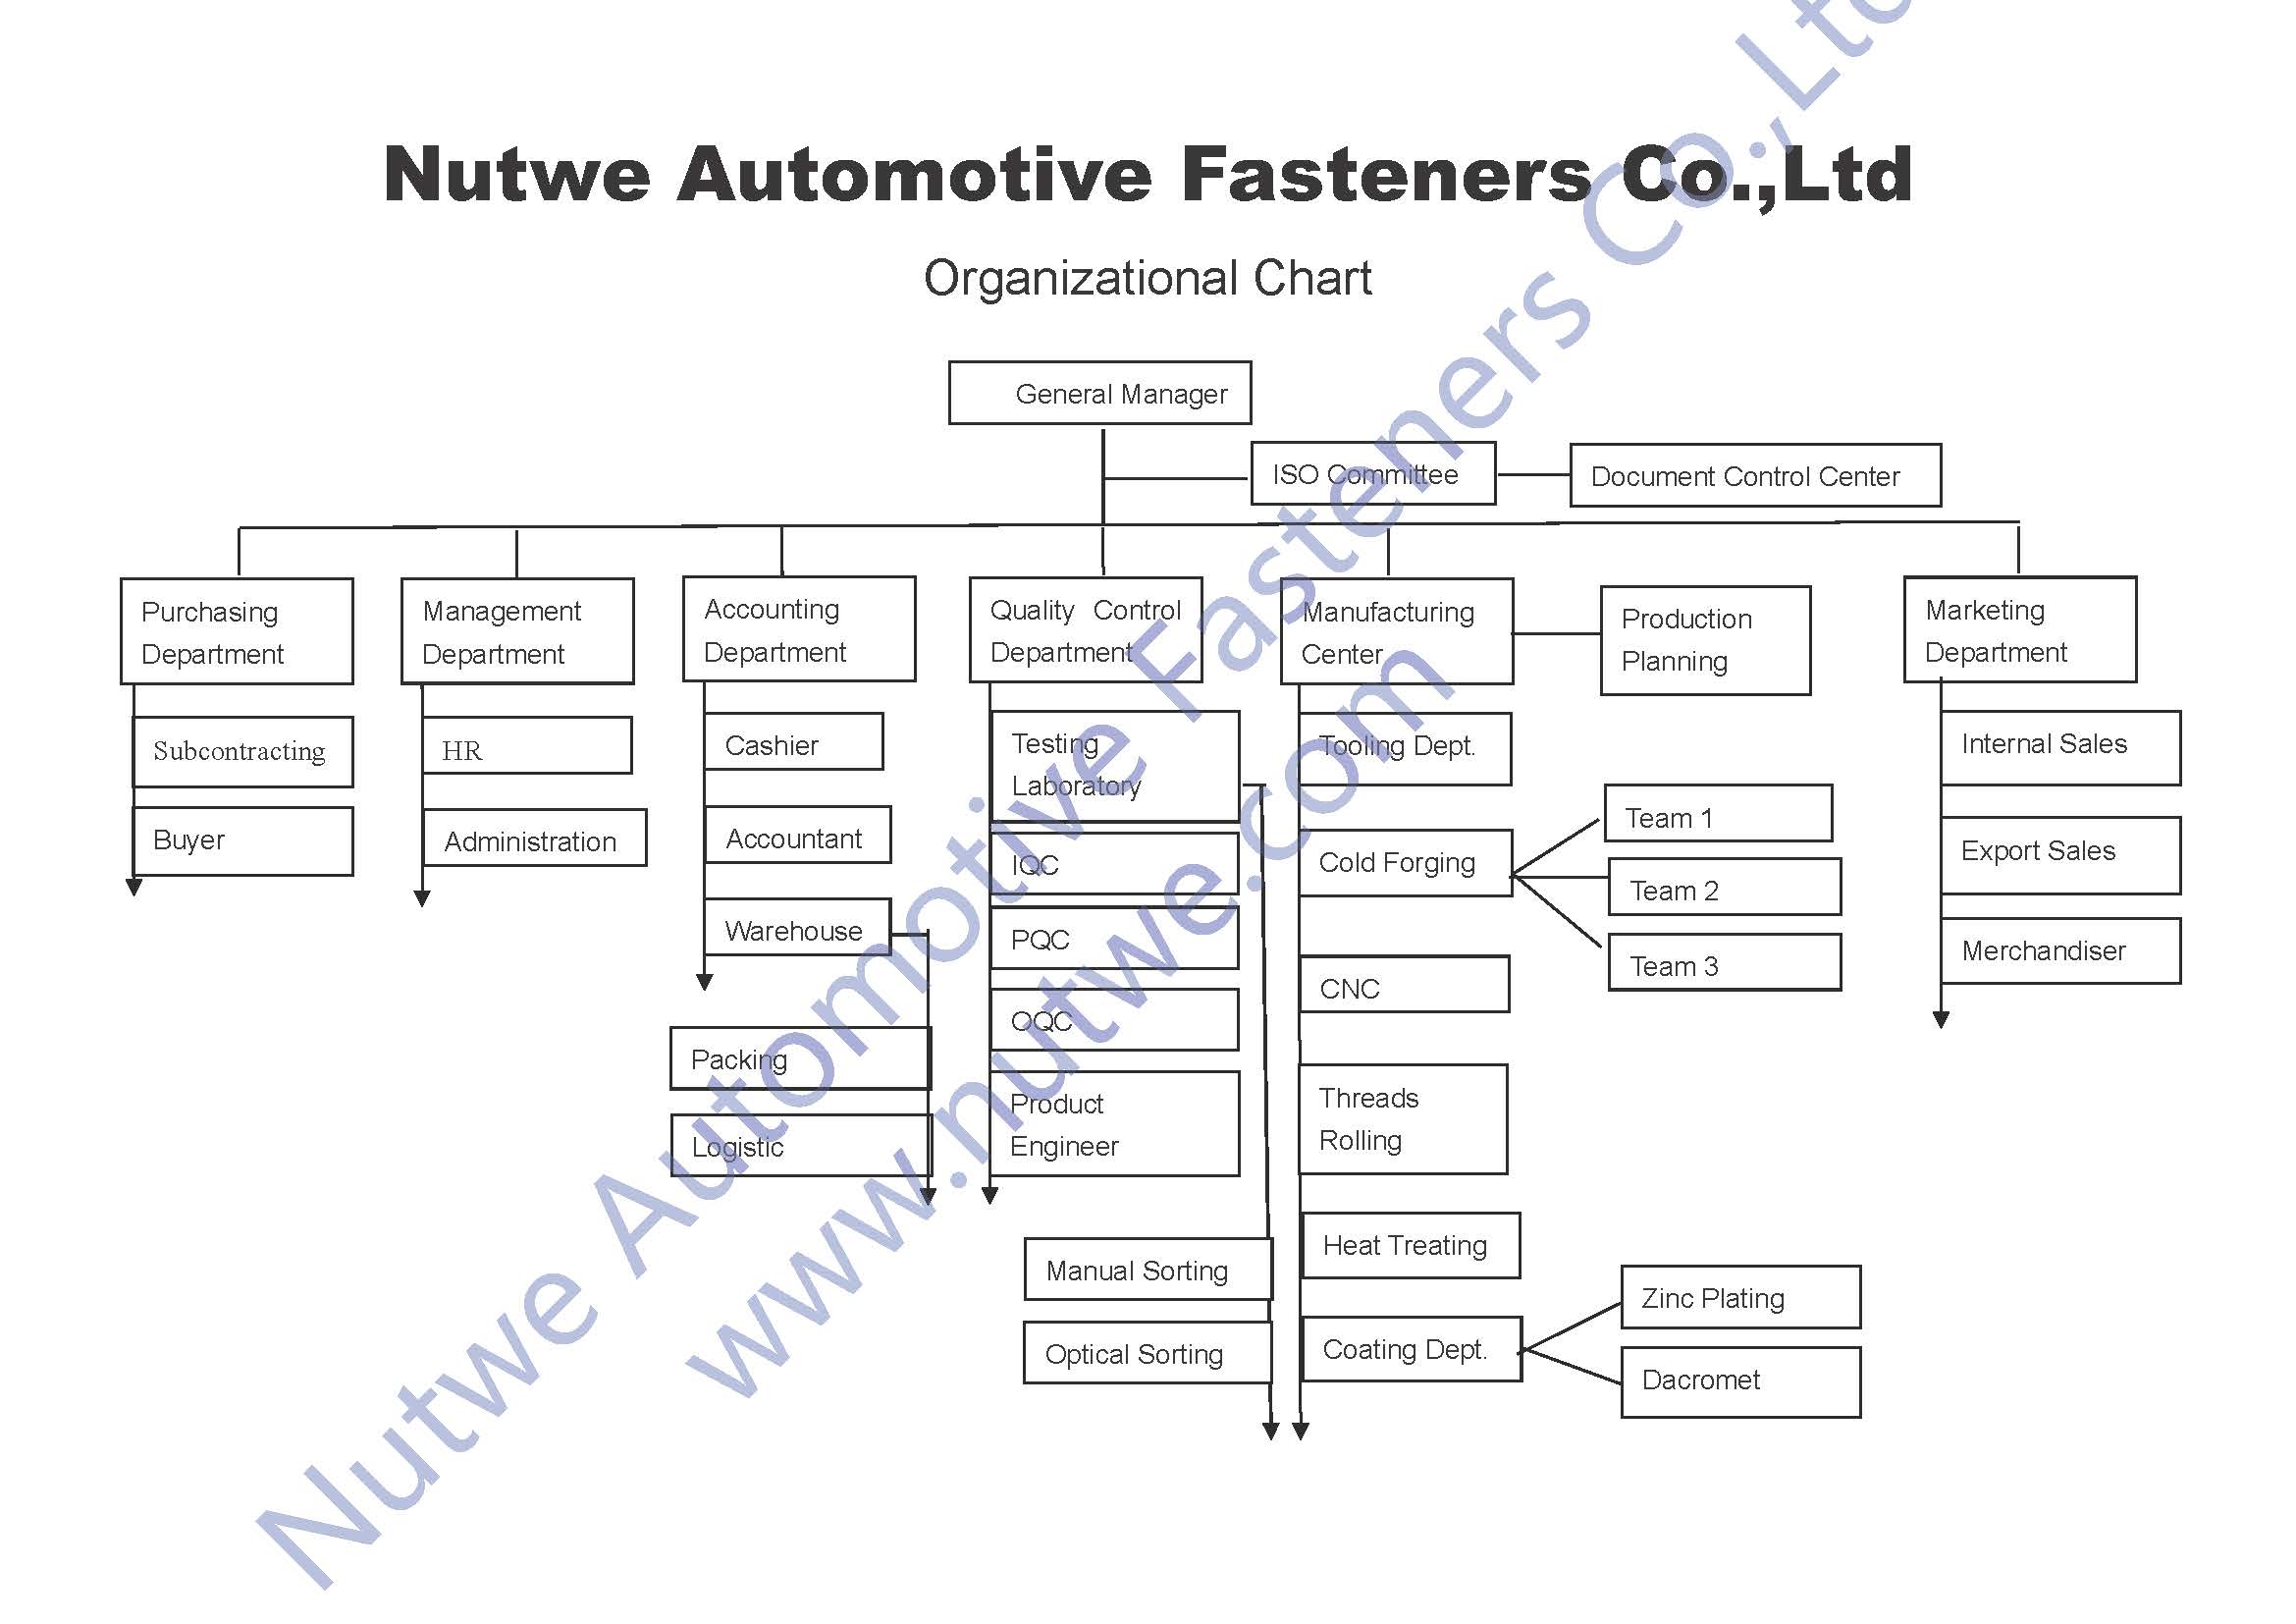 Nutwe Automotive Fasteners Co.,Ltd - Organization Structure